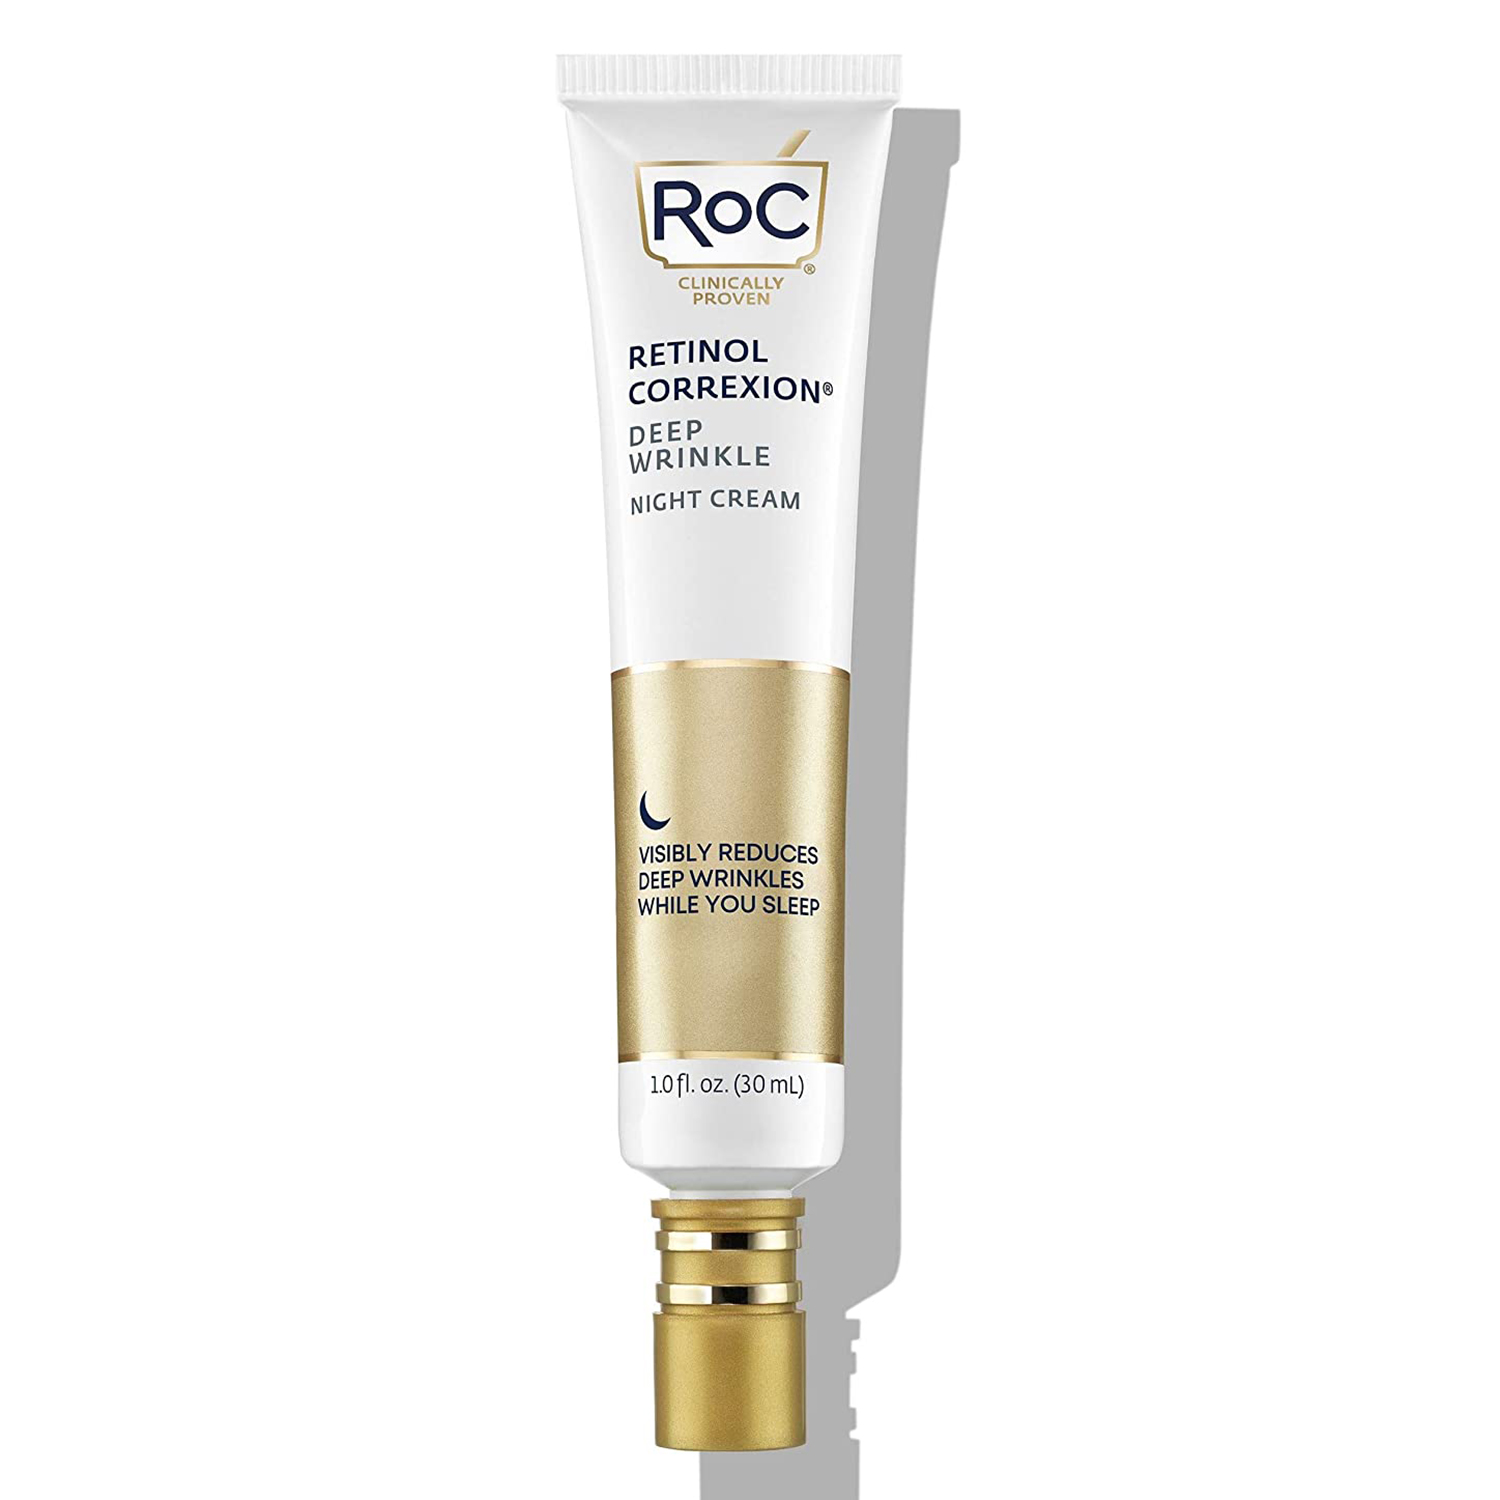 Roc Retinol Correxion Deep Wrinkle Anti-Aging Retinol Night Cream